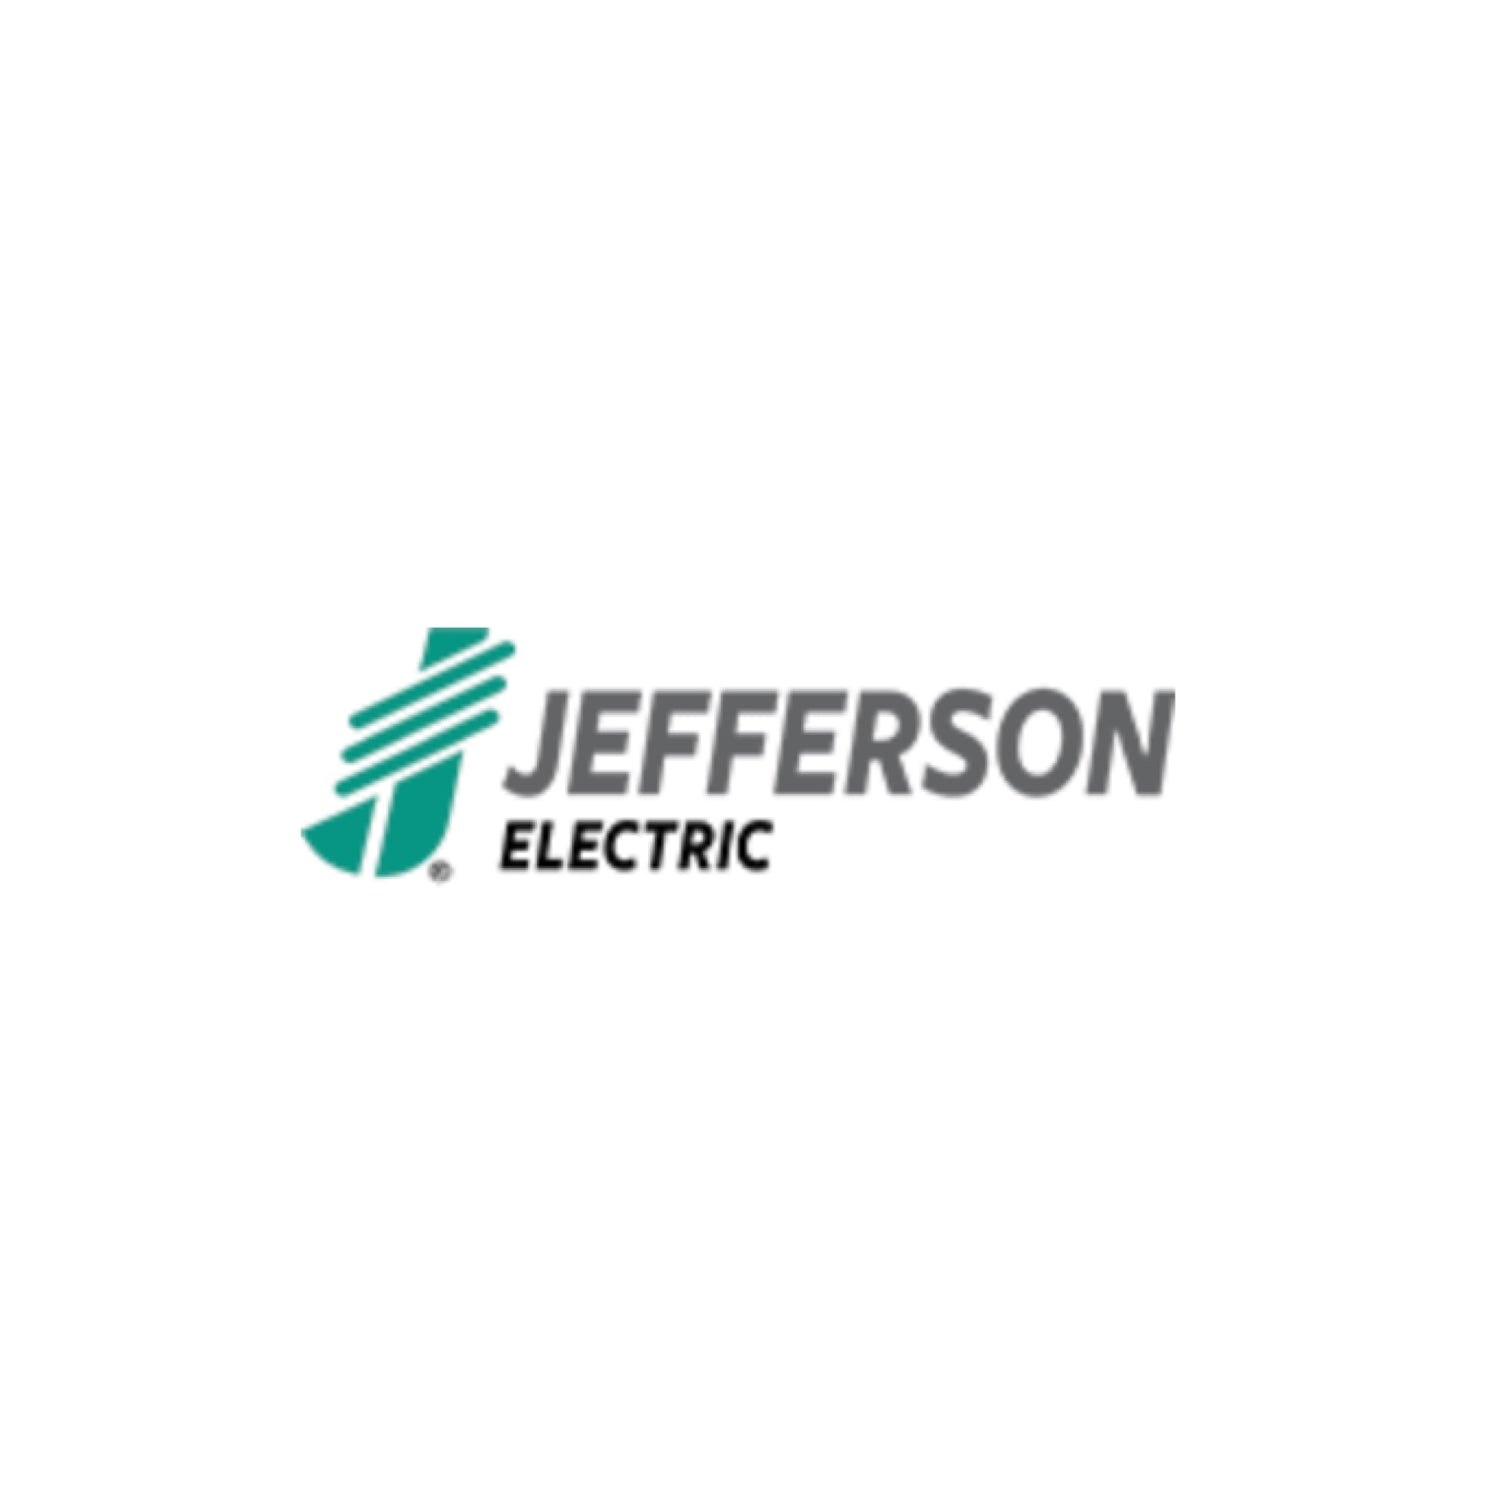 JEFFERSON ELECTRIC